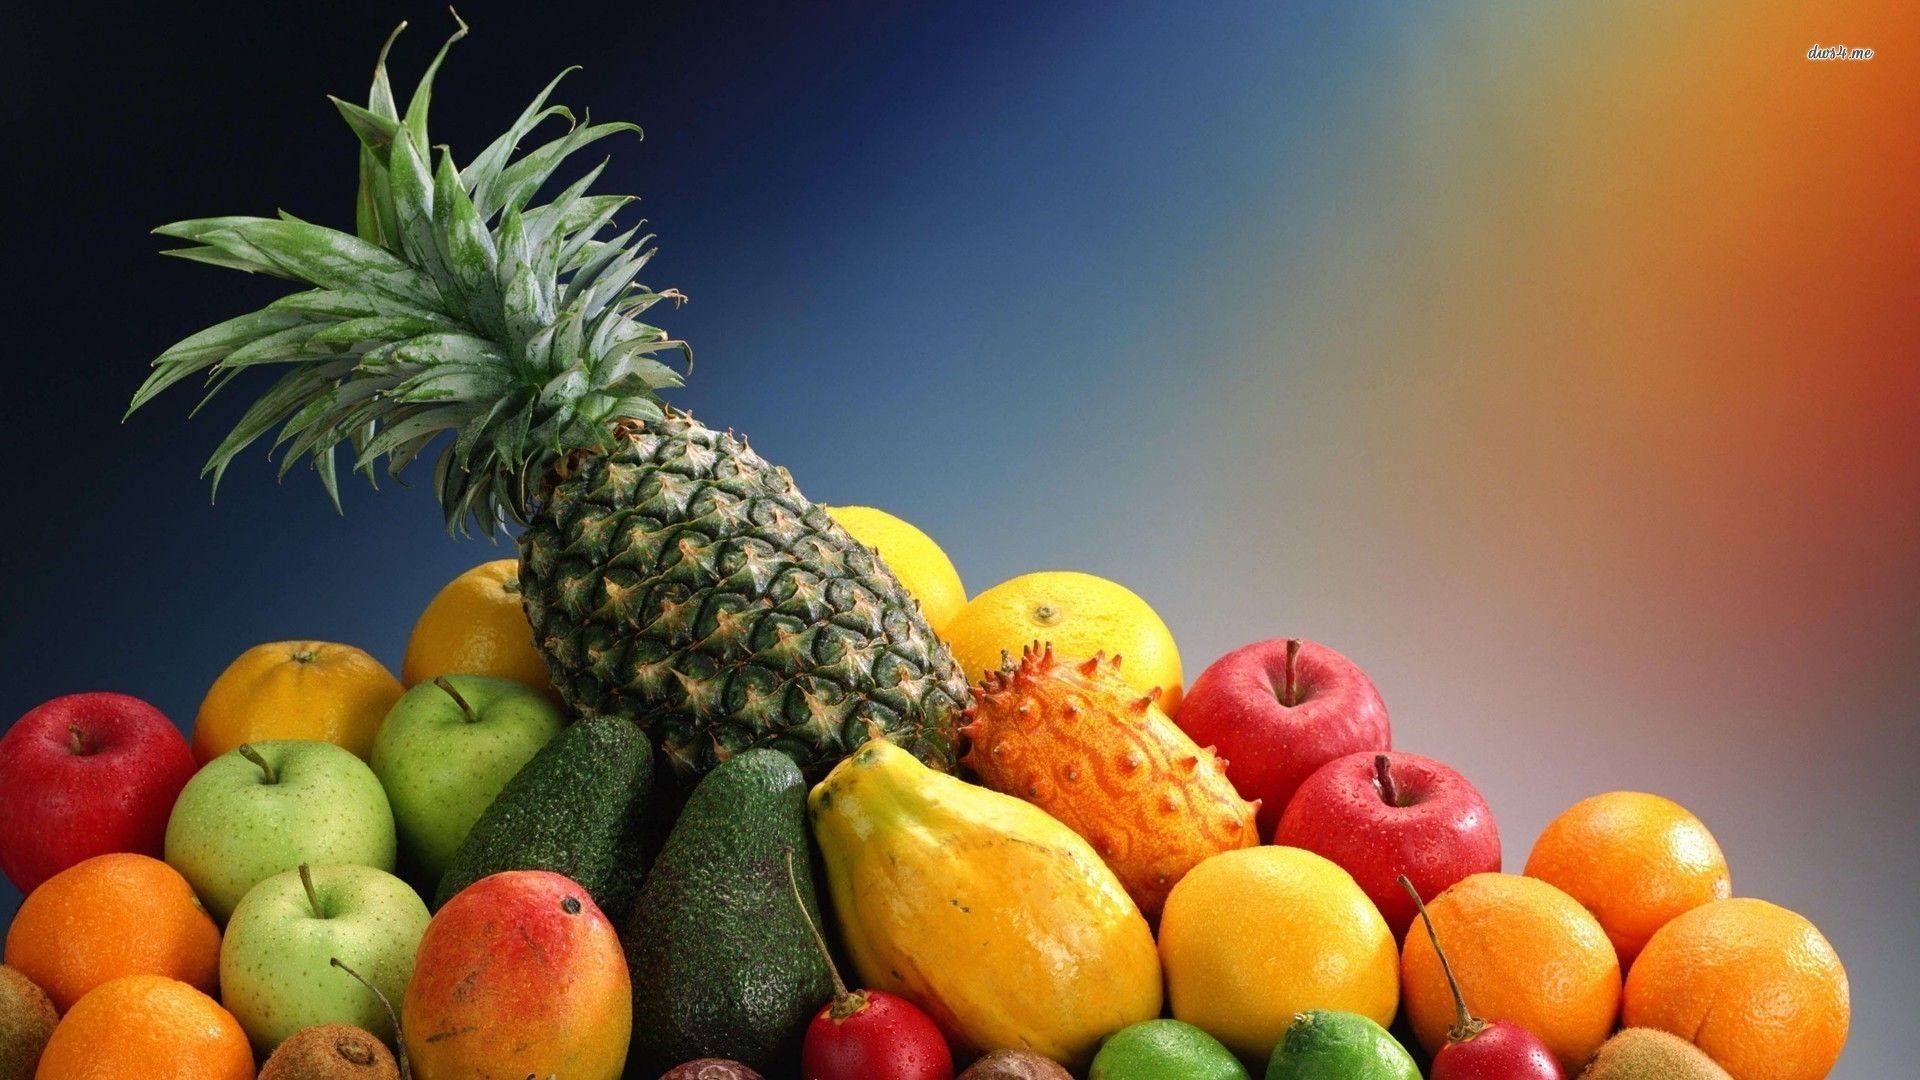 List Of Tropical Fruits - wallpaper.